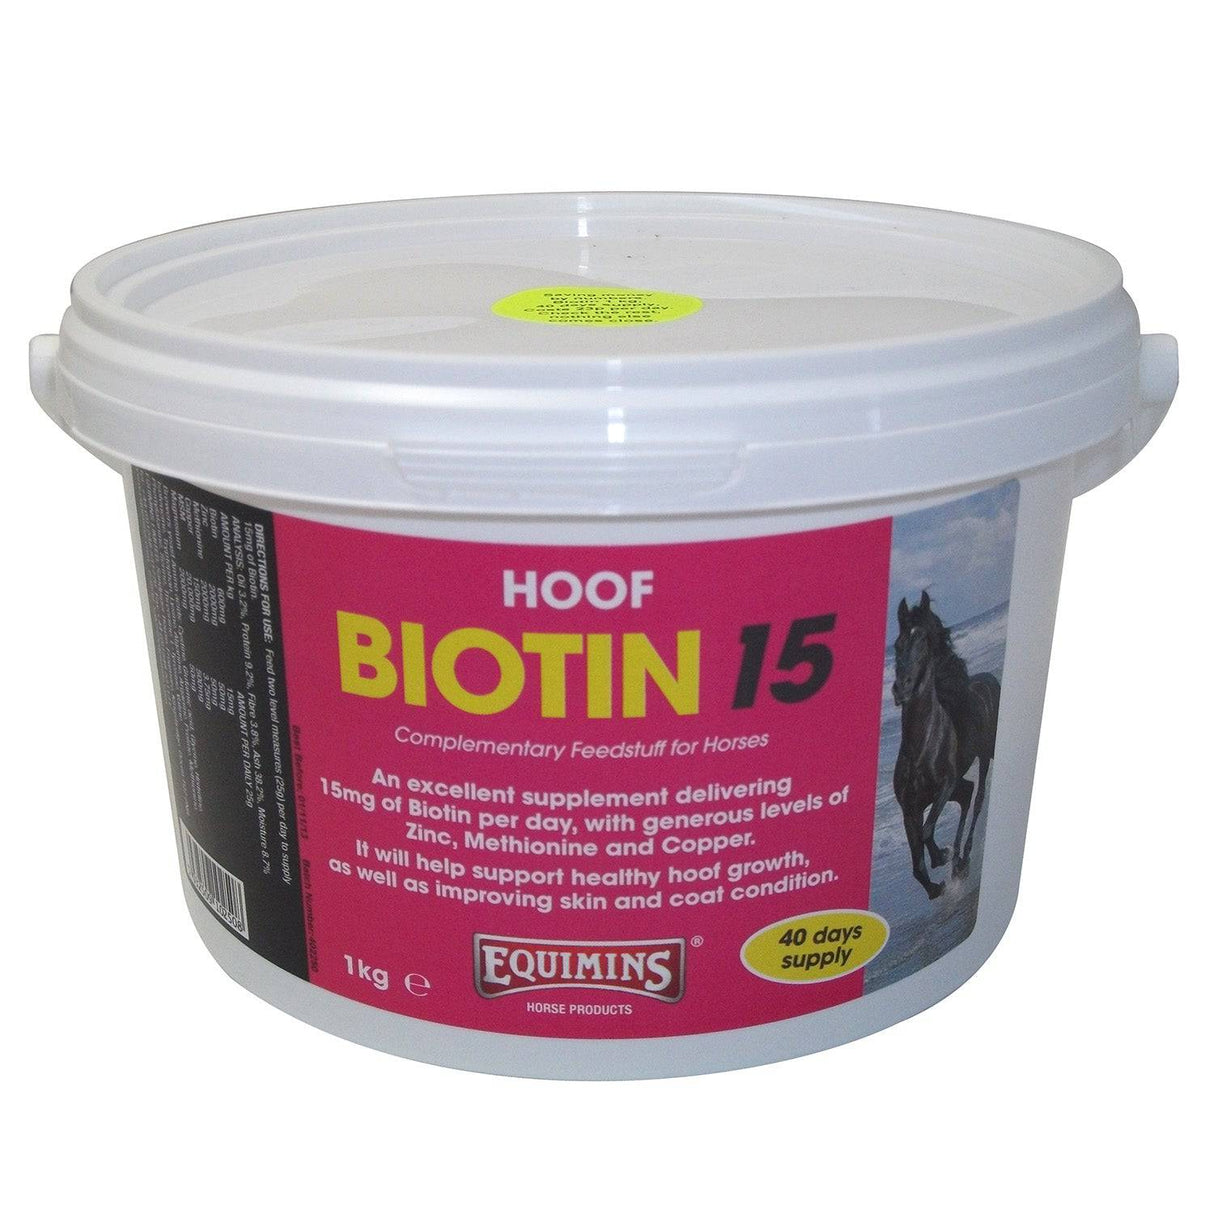 Equimins Biotin 15 Horse Supplements 1Kg Barnstaple Equestrian Supplies